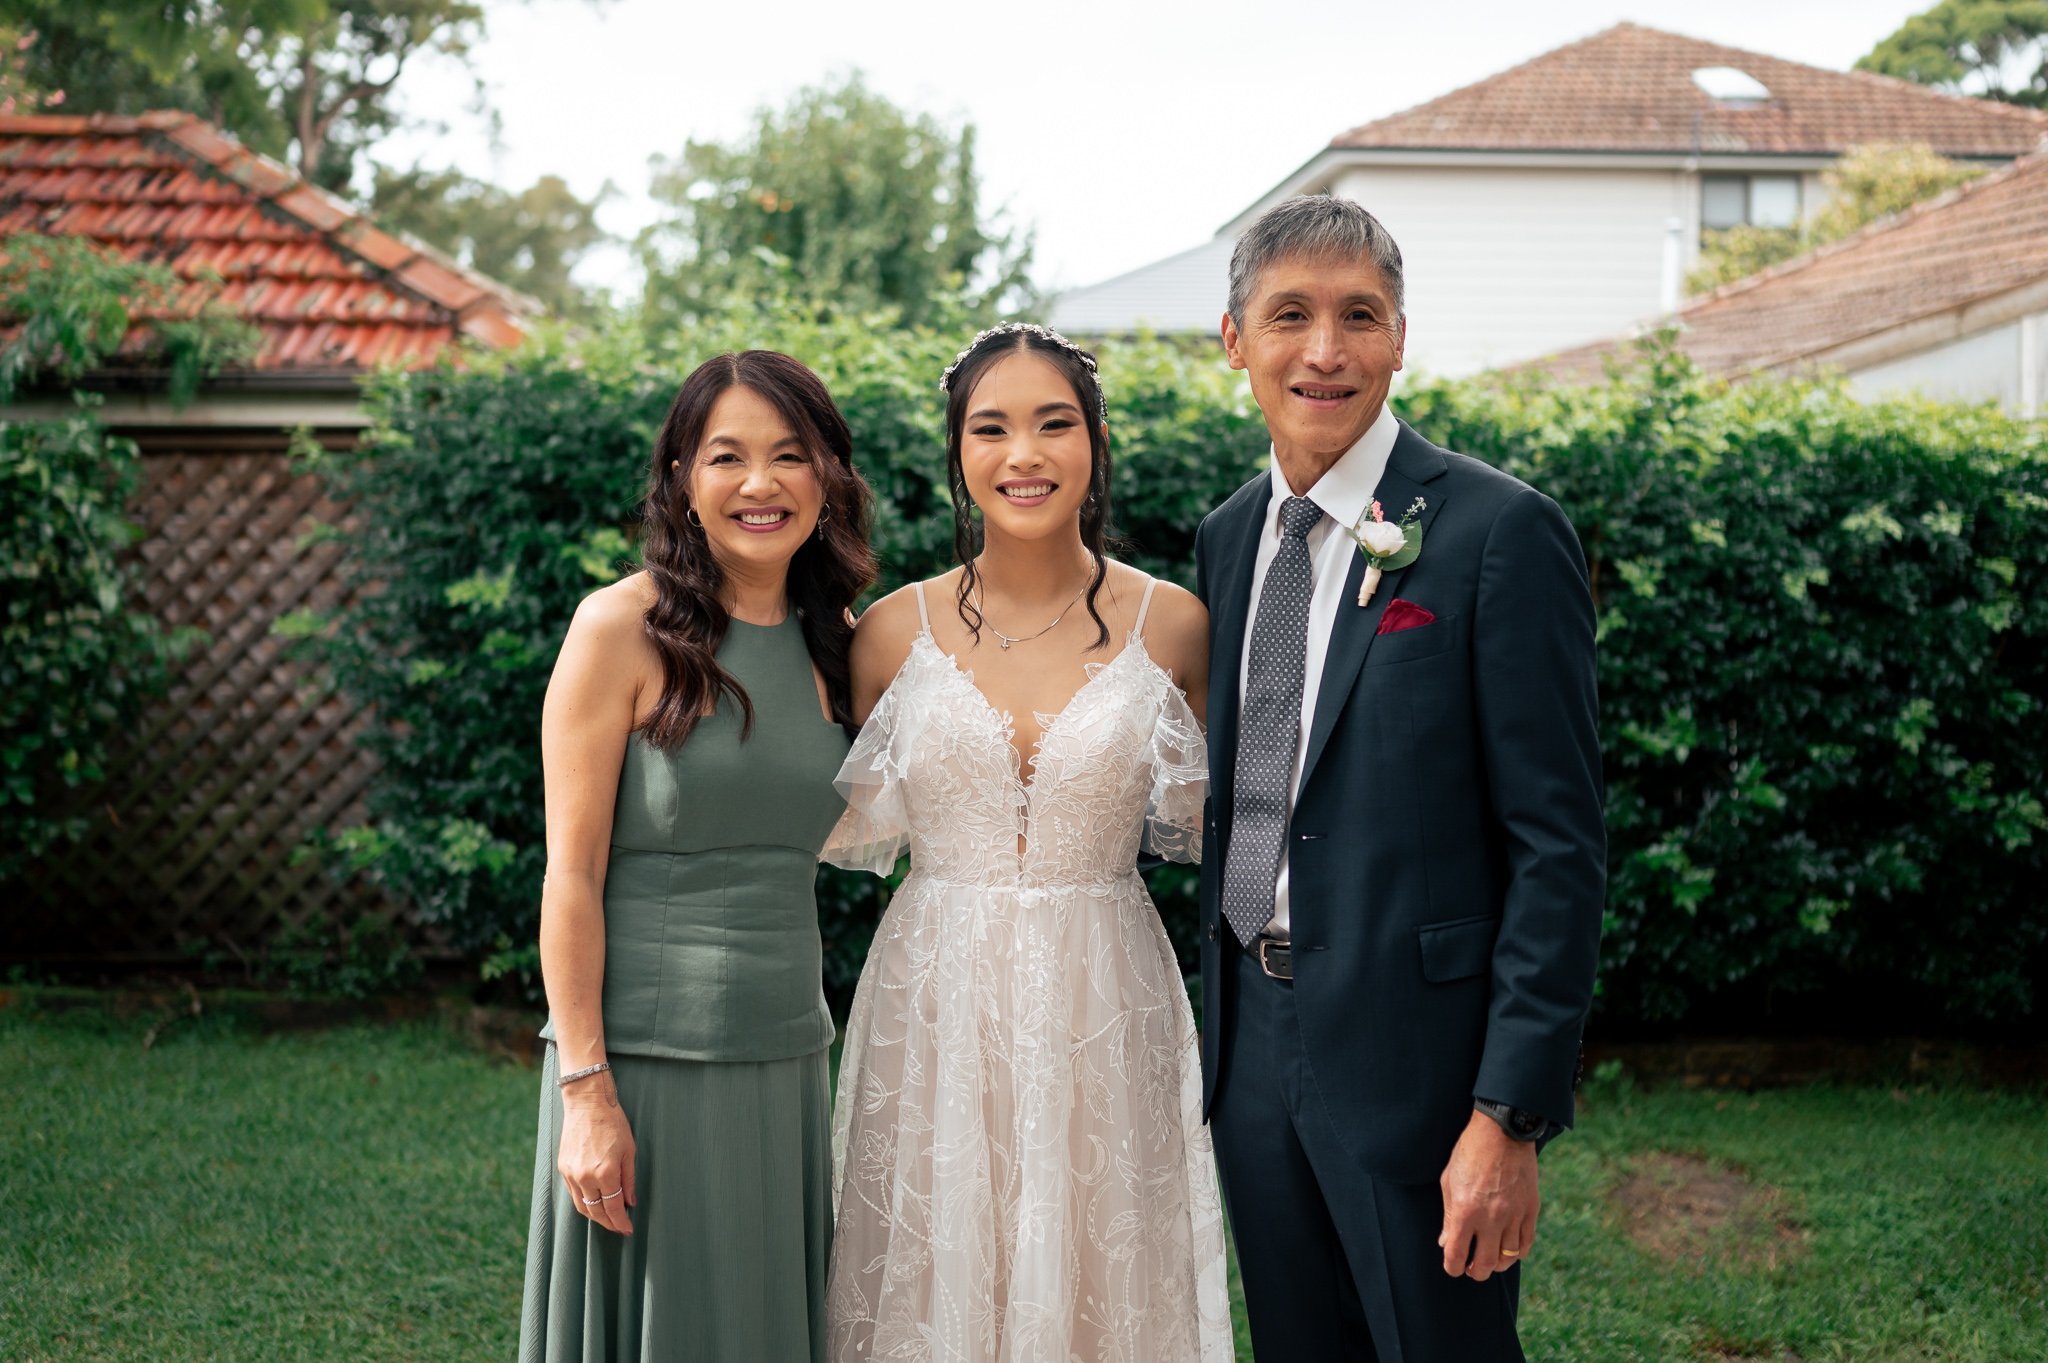 Family Photos at a Sydney Wedding by a Sydney Wedding Photographer